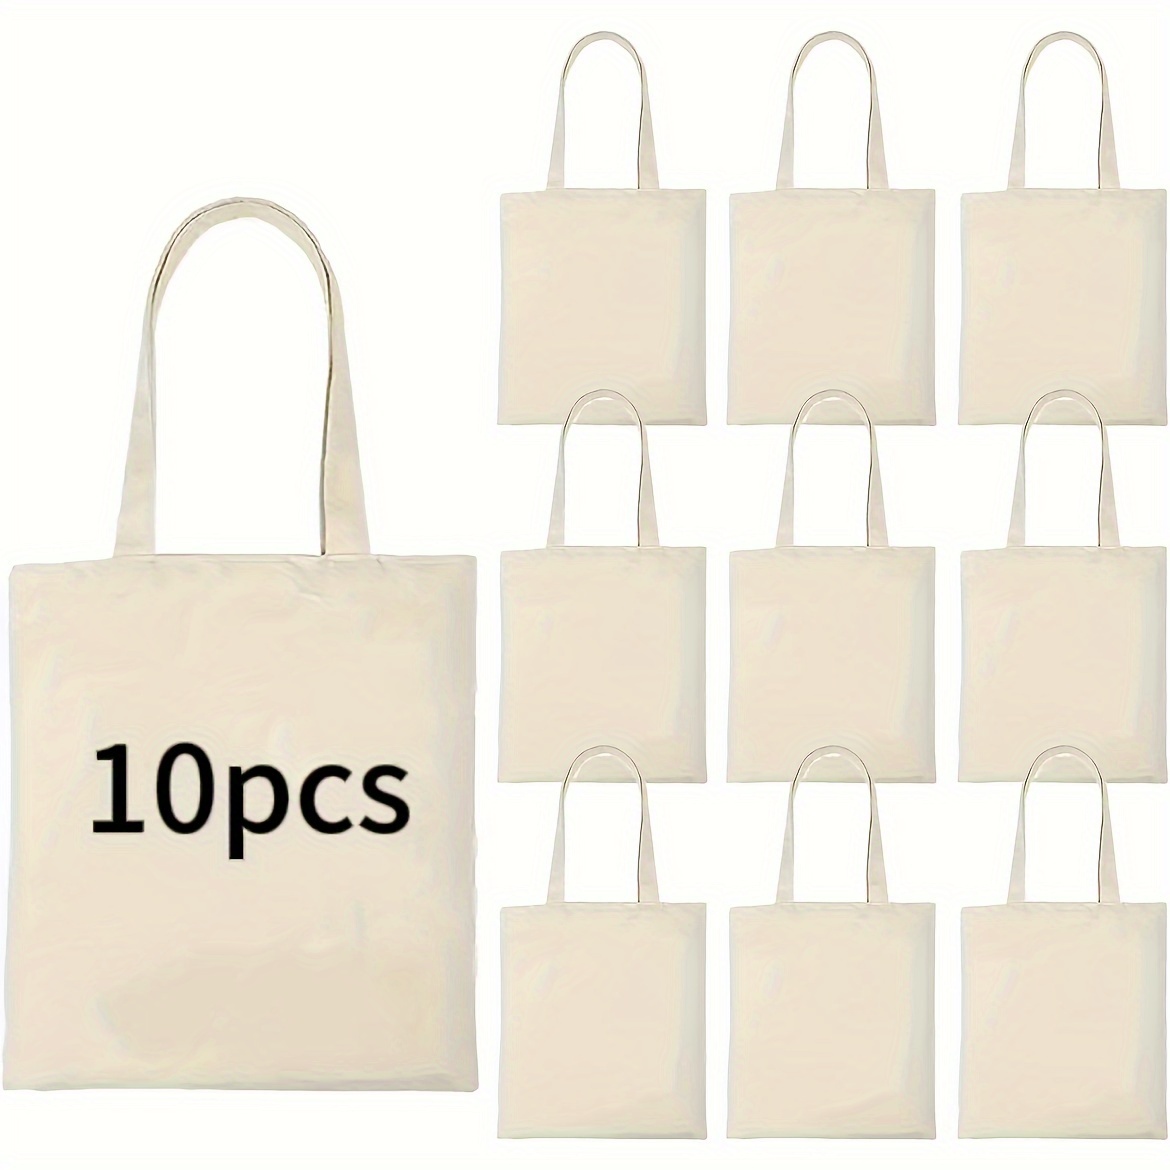 

10pcs Minimalist Natural Color Blank Hand-held Bag With Painting, Sewing, Stickers, Handmade Diy Canvas Bag, Picnic Packing Bag, Daily Attendance Handbag, Gift Bag